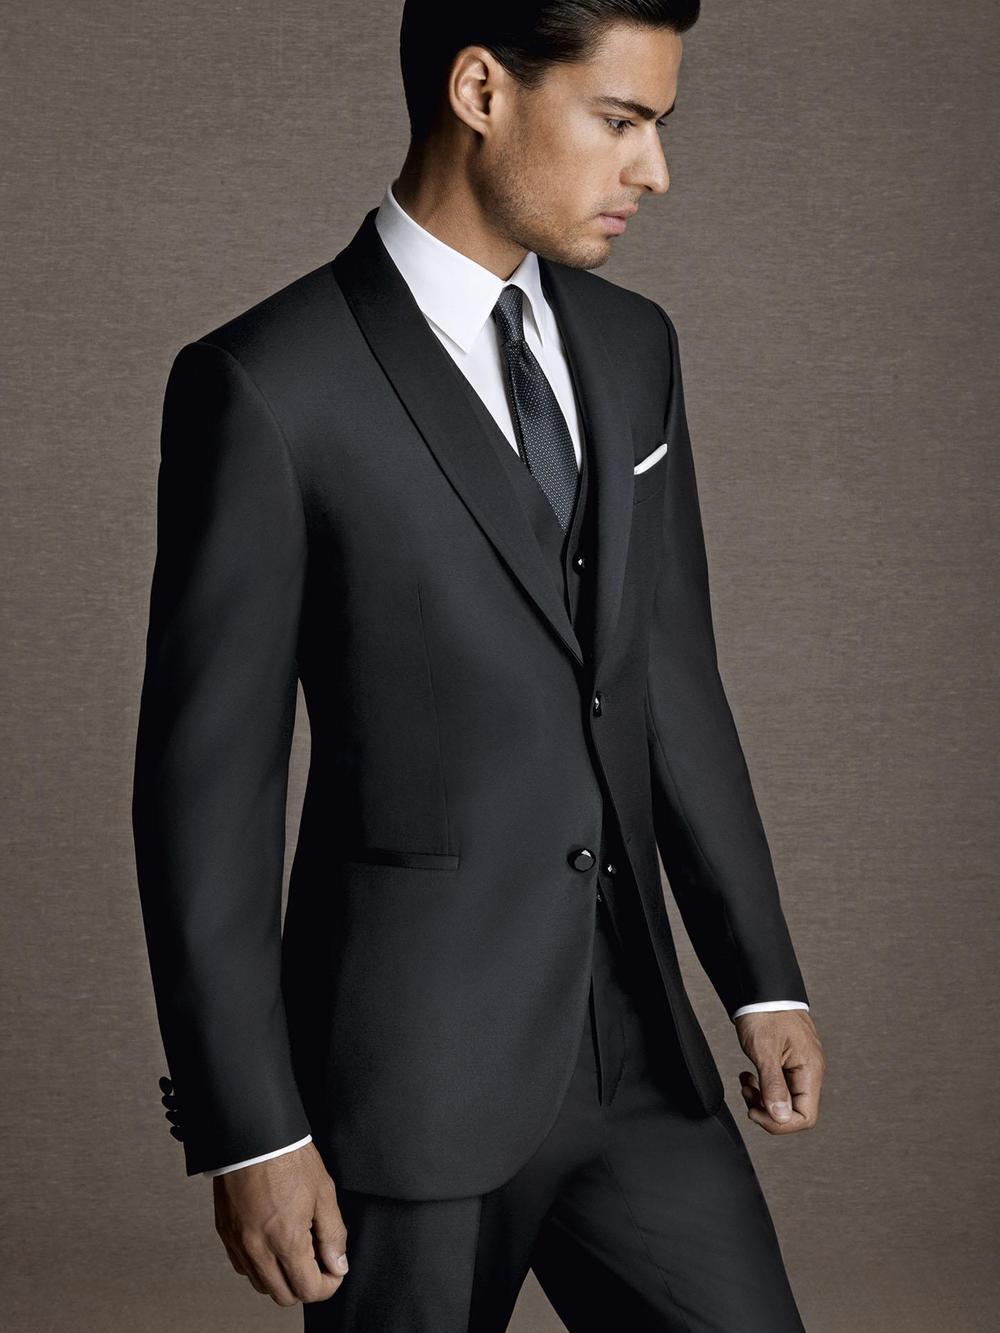 New Arrival Vintage Black MenTuxedos 3 Pieces Wedding Suits For Men Shawl Lapel Groomsmen Suits Slim Fit Men Wedding Suits